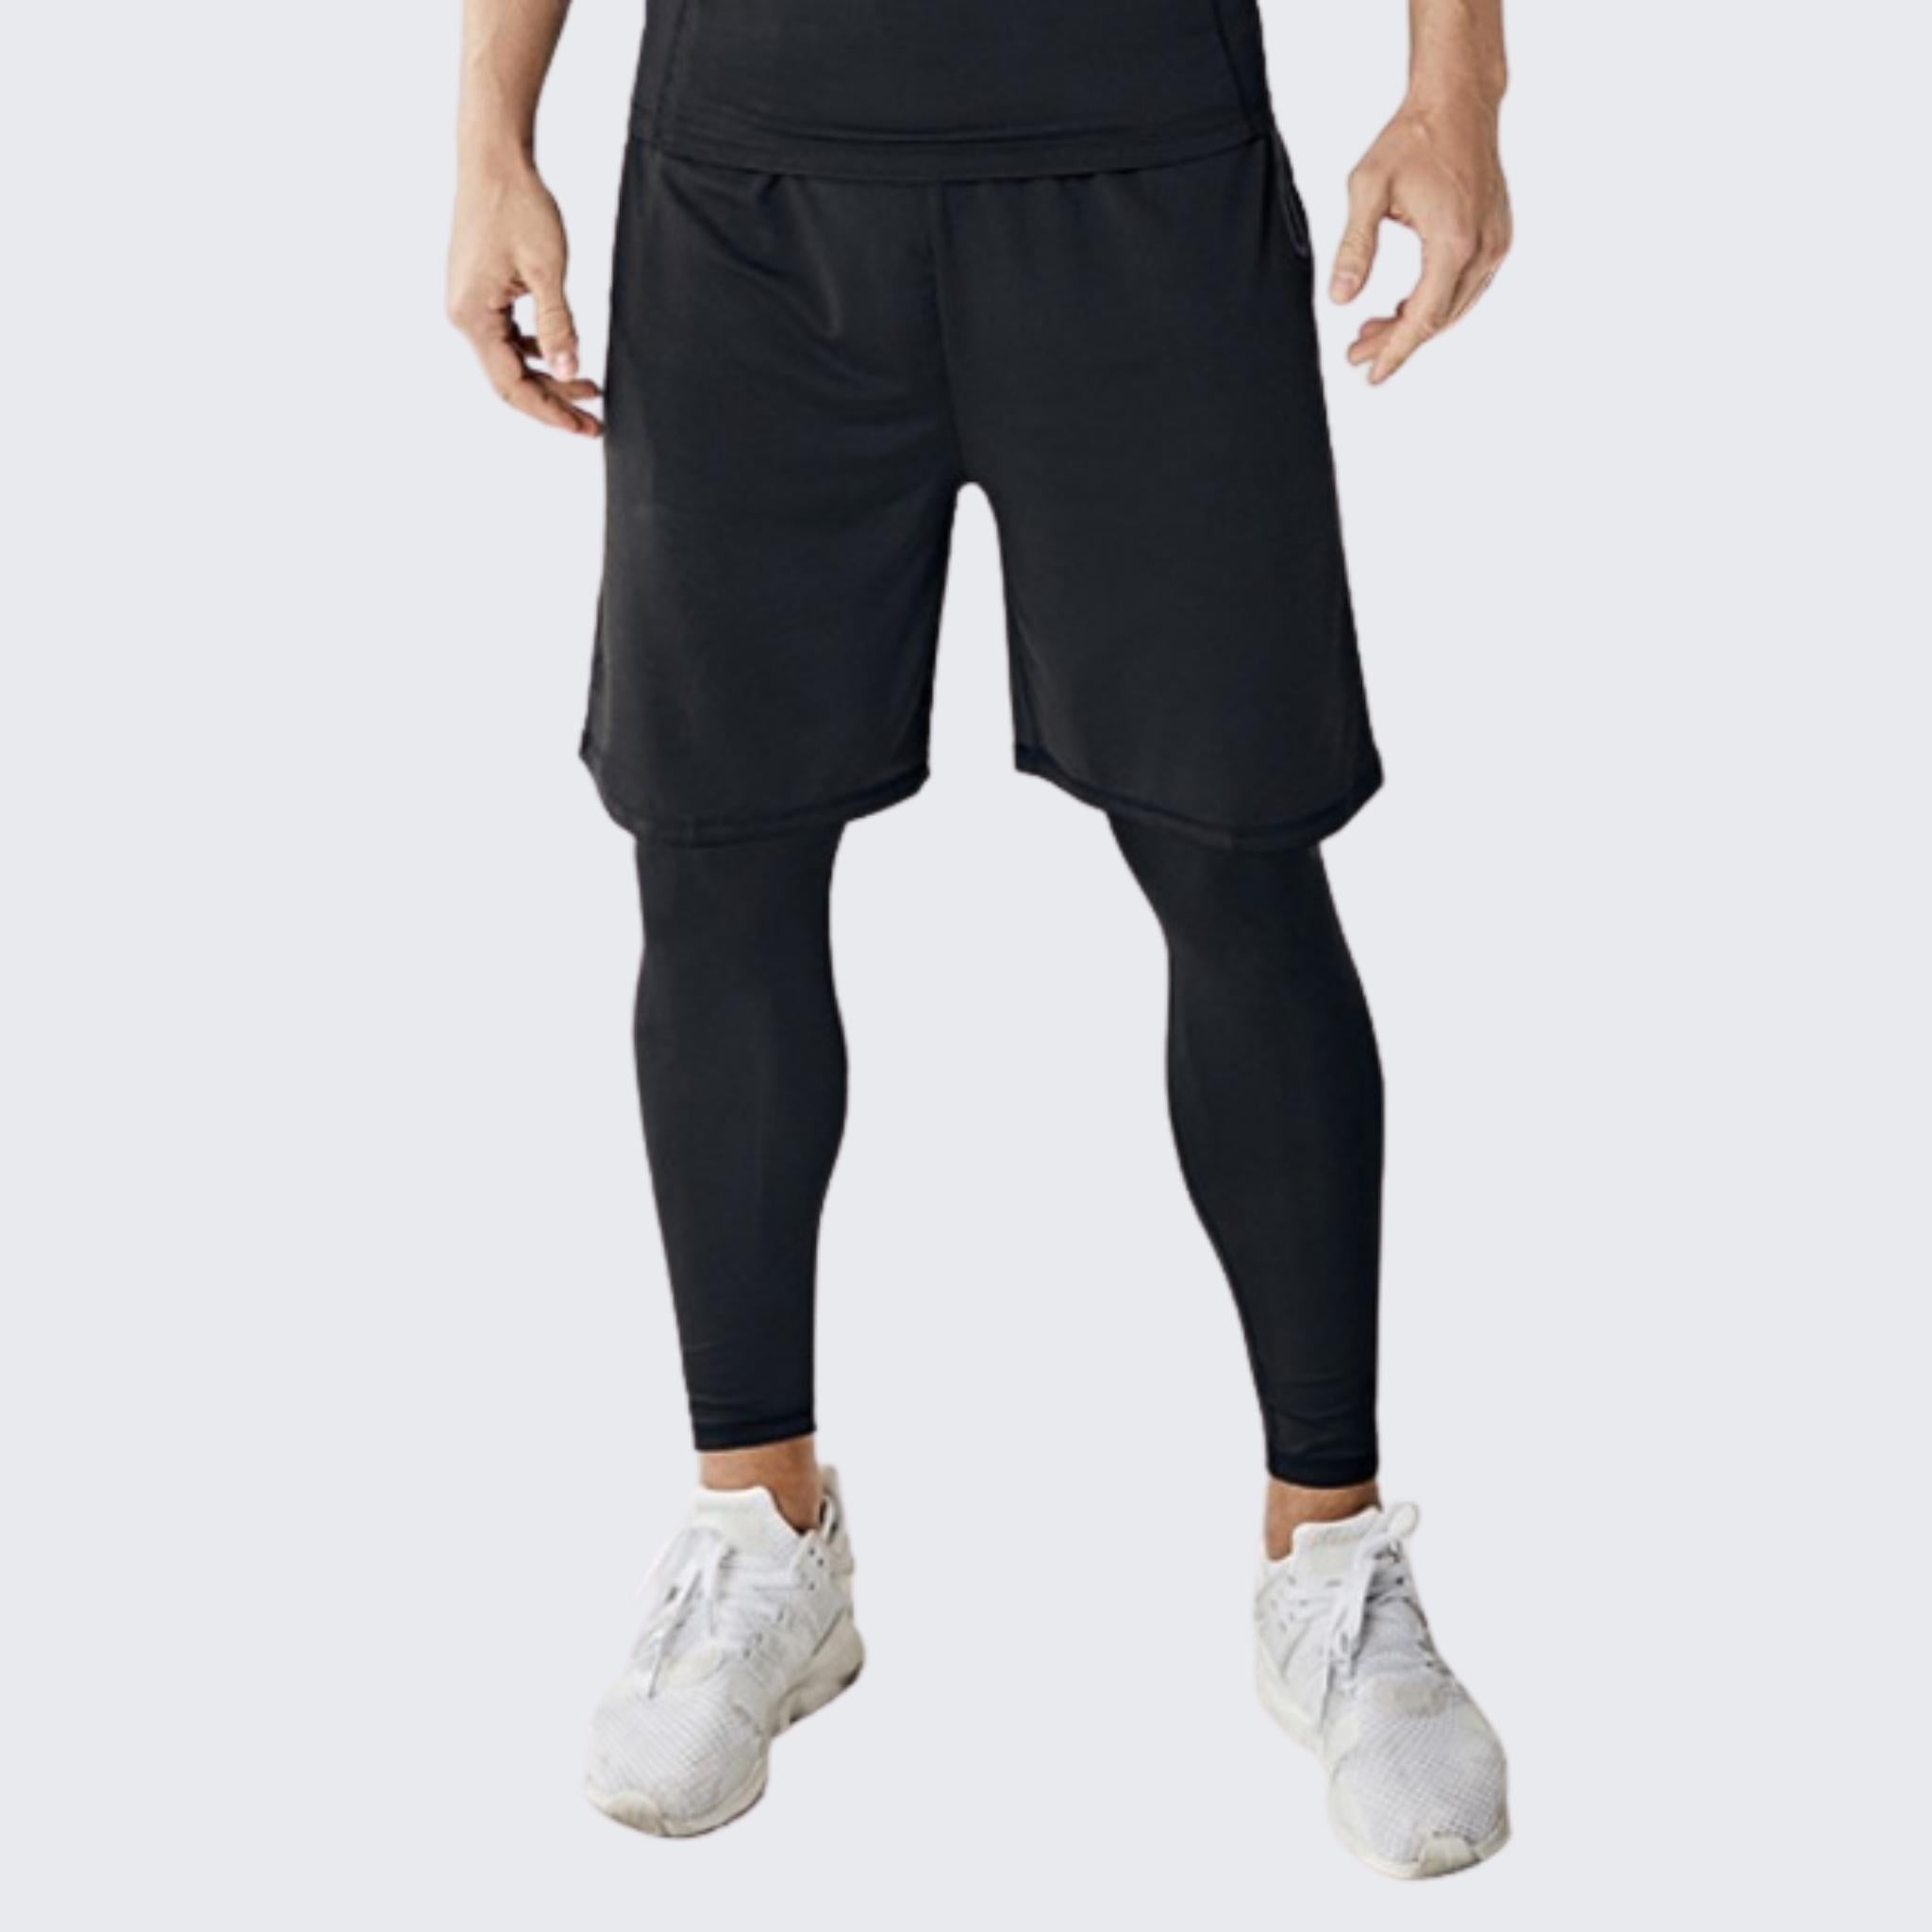 WIWU Men Compression Pants Sports Tights Leggings Base Layers Workout  Running - Black | Catch.com.au